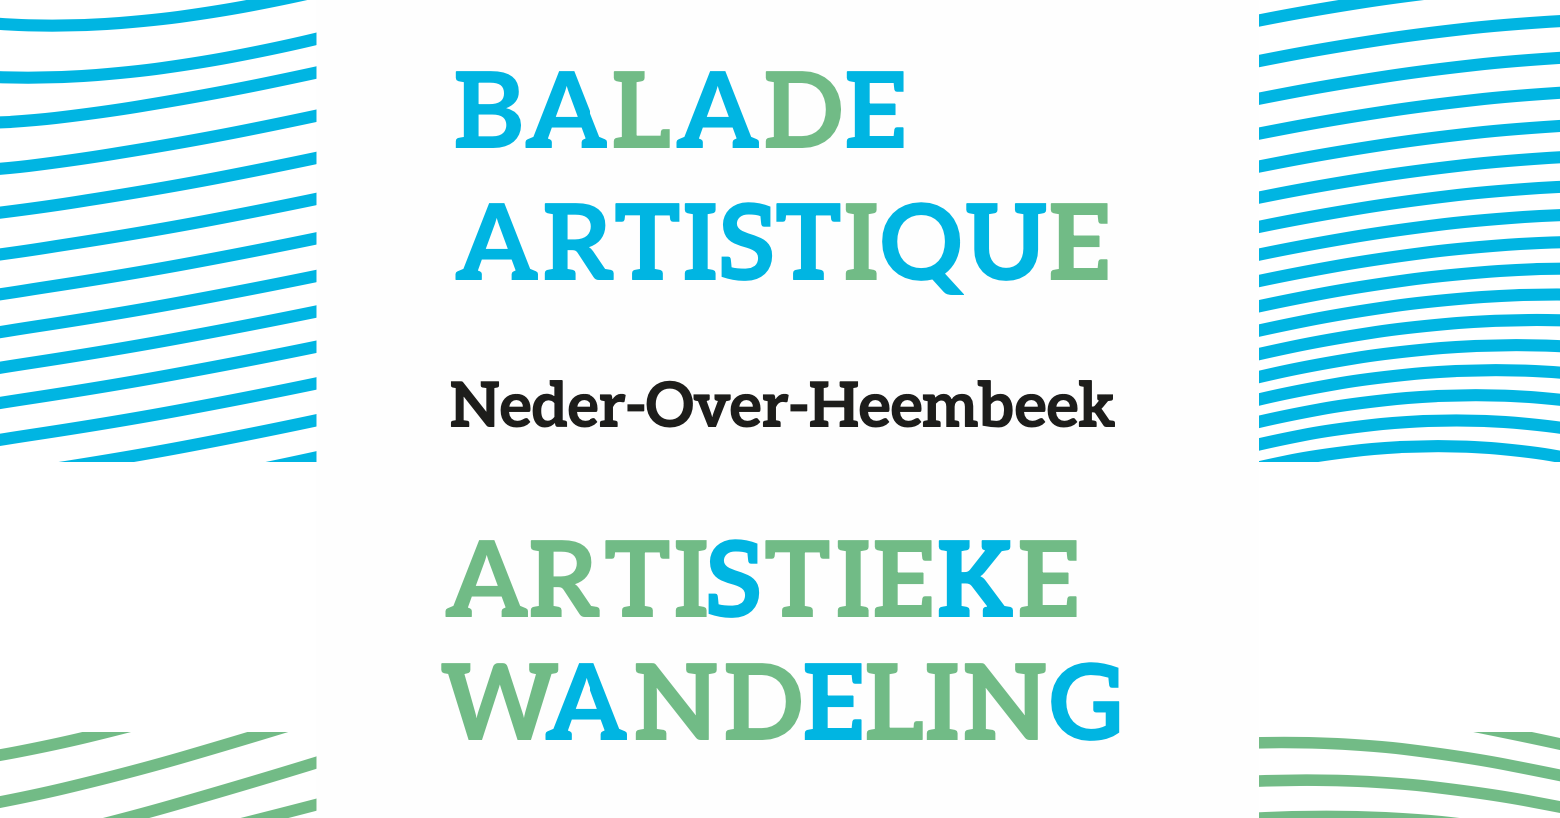 Balade artistique / Artistieke wandeling NOH 2022